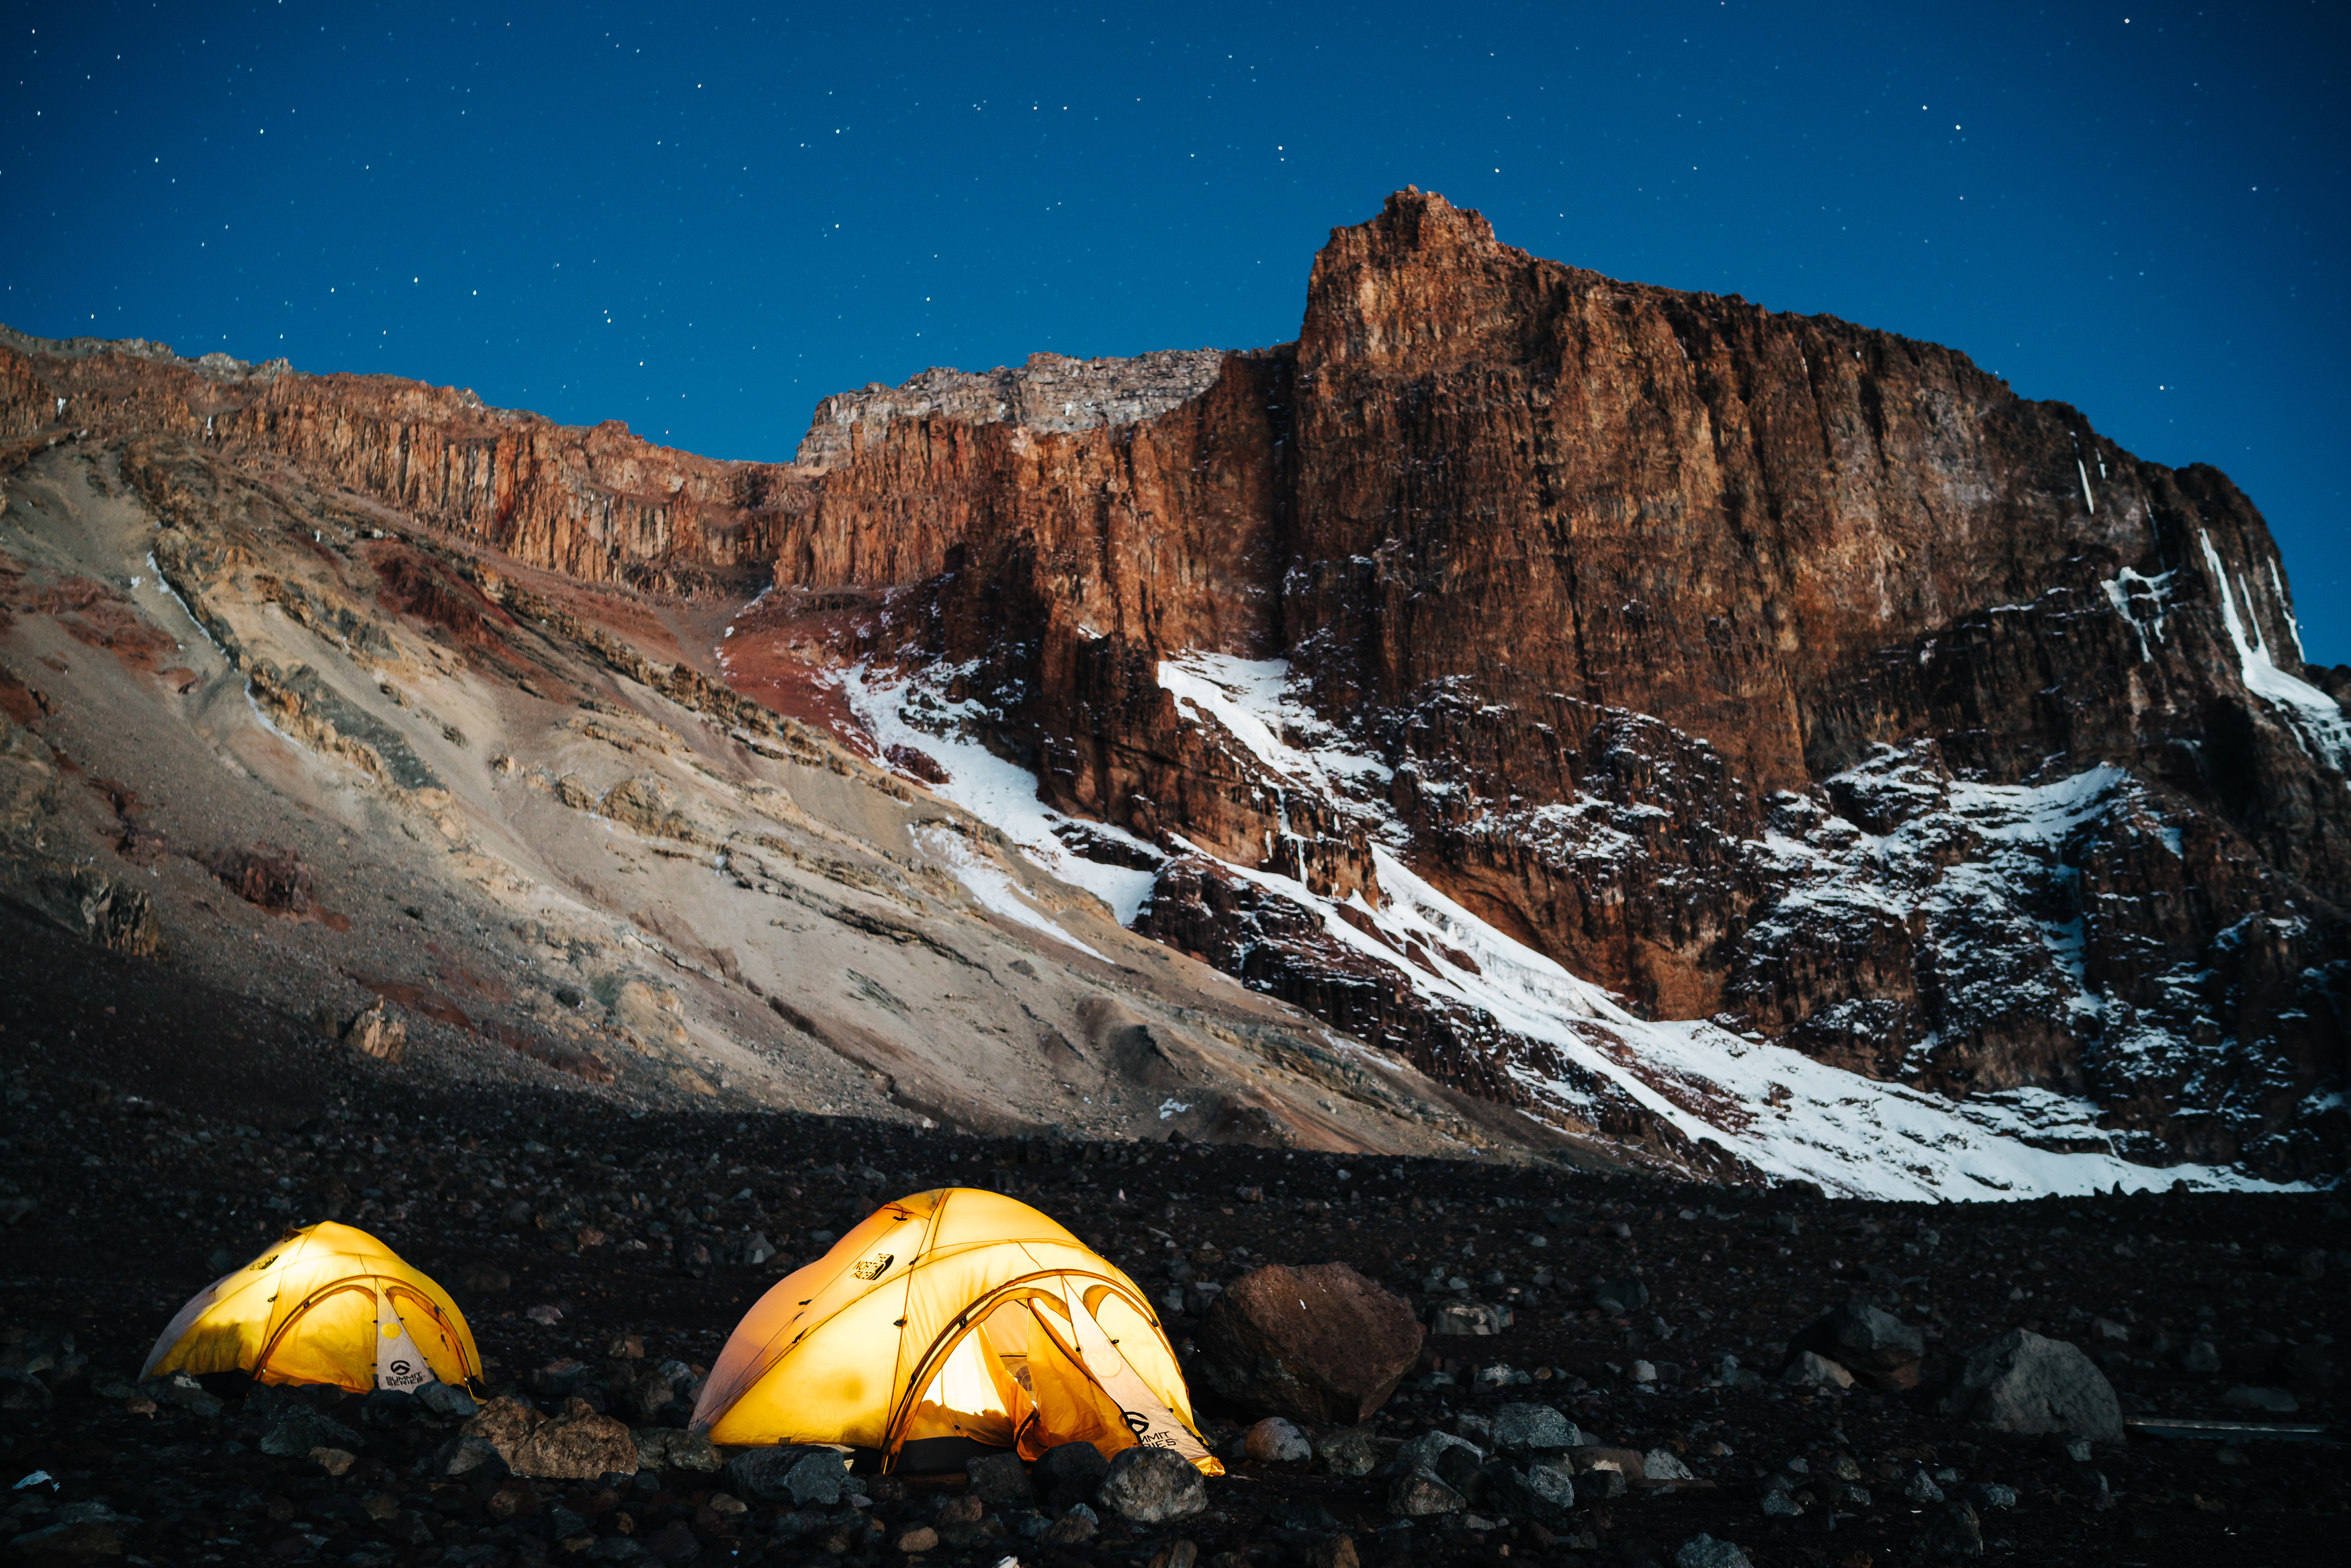 Route camping. Килиманджаро кратер. Хайкинг на Килиманджаро. Базовый лагерь Килиманджаро. Поход на Килиманджаро.